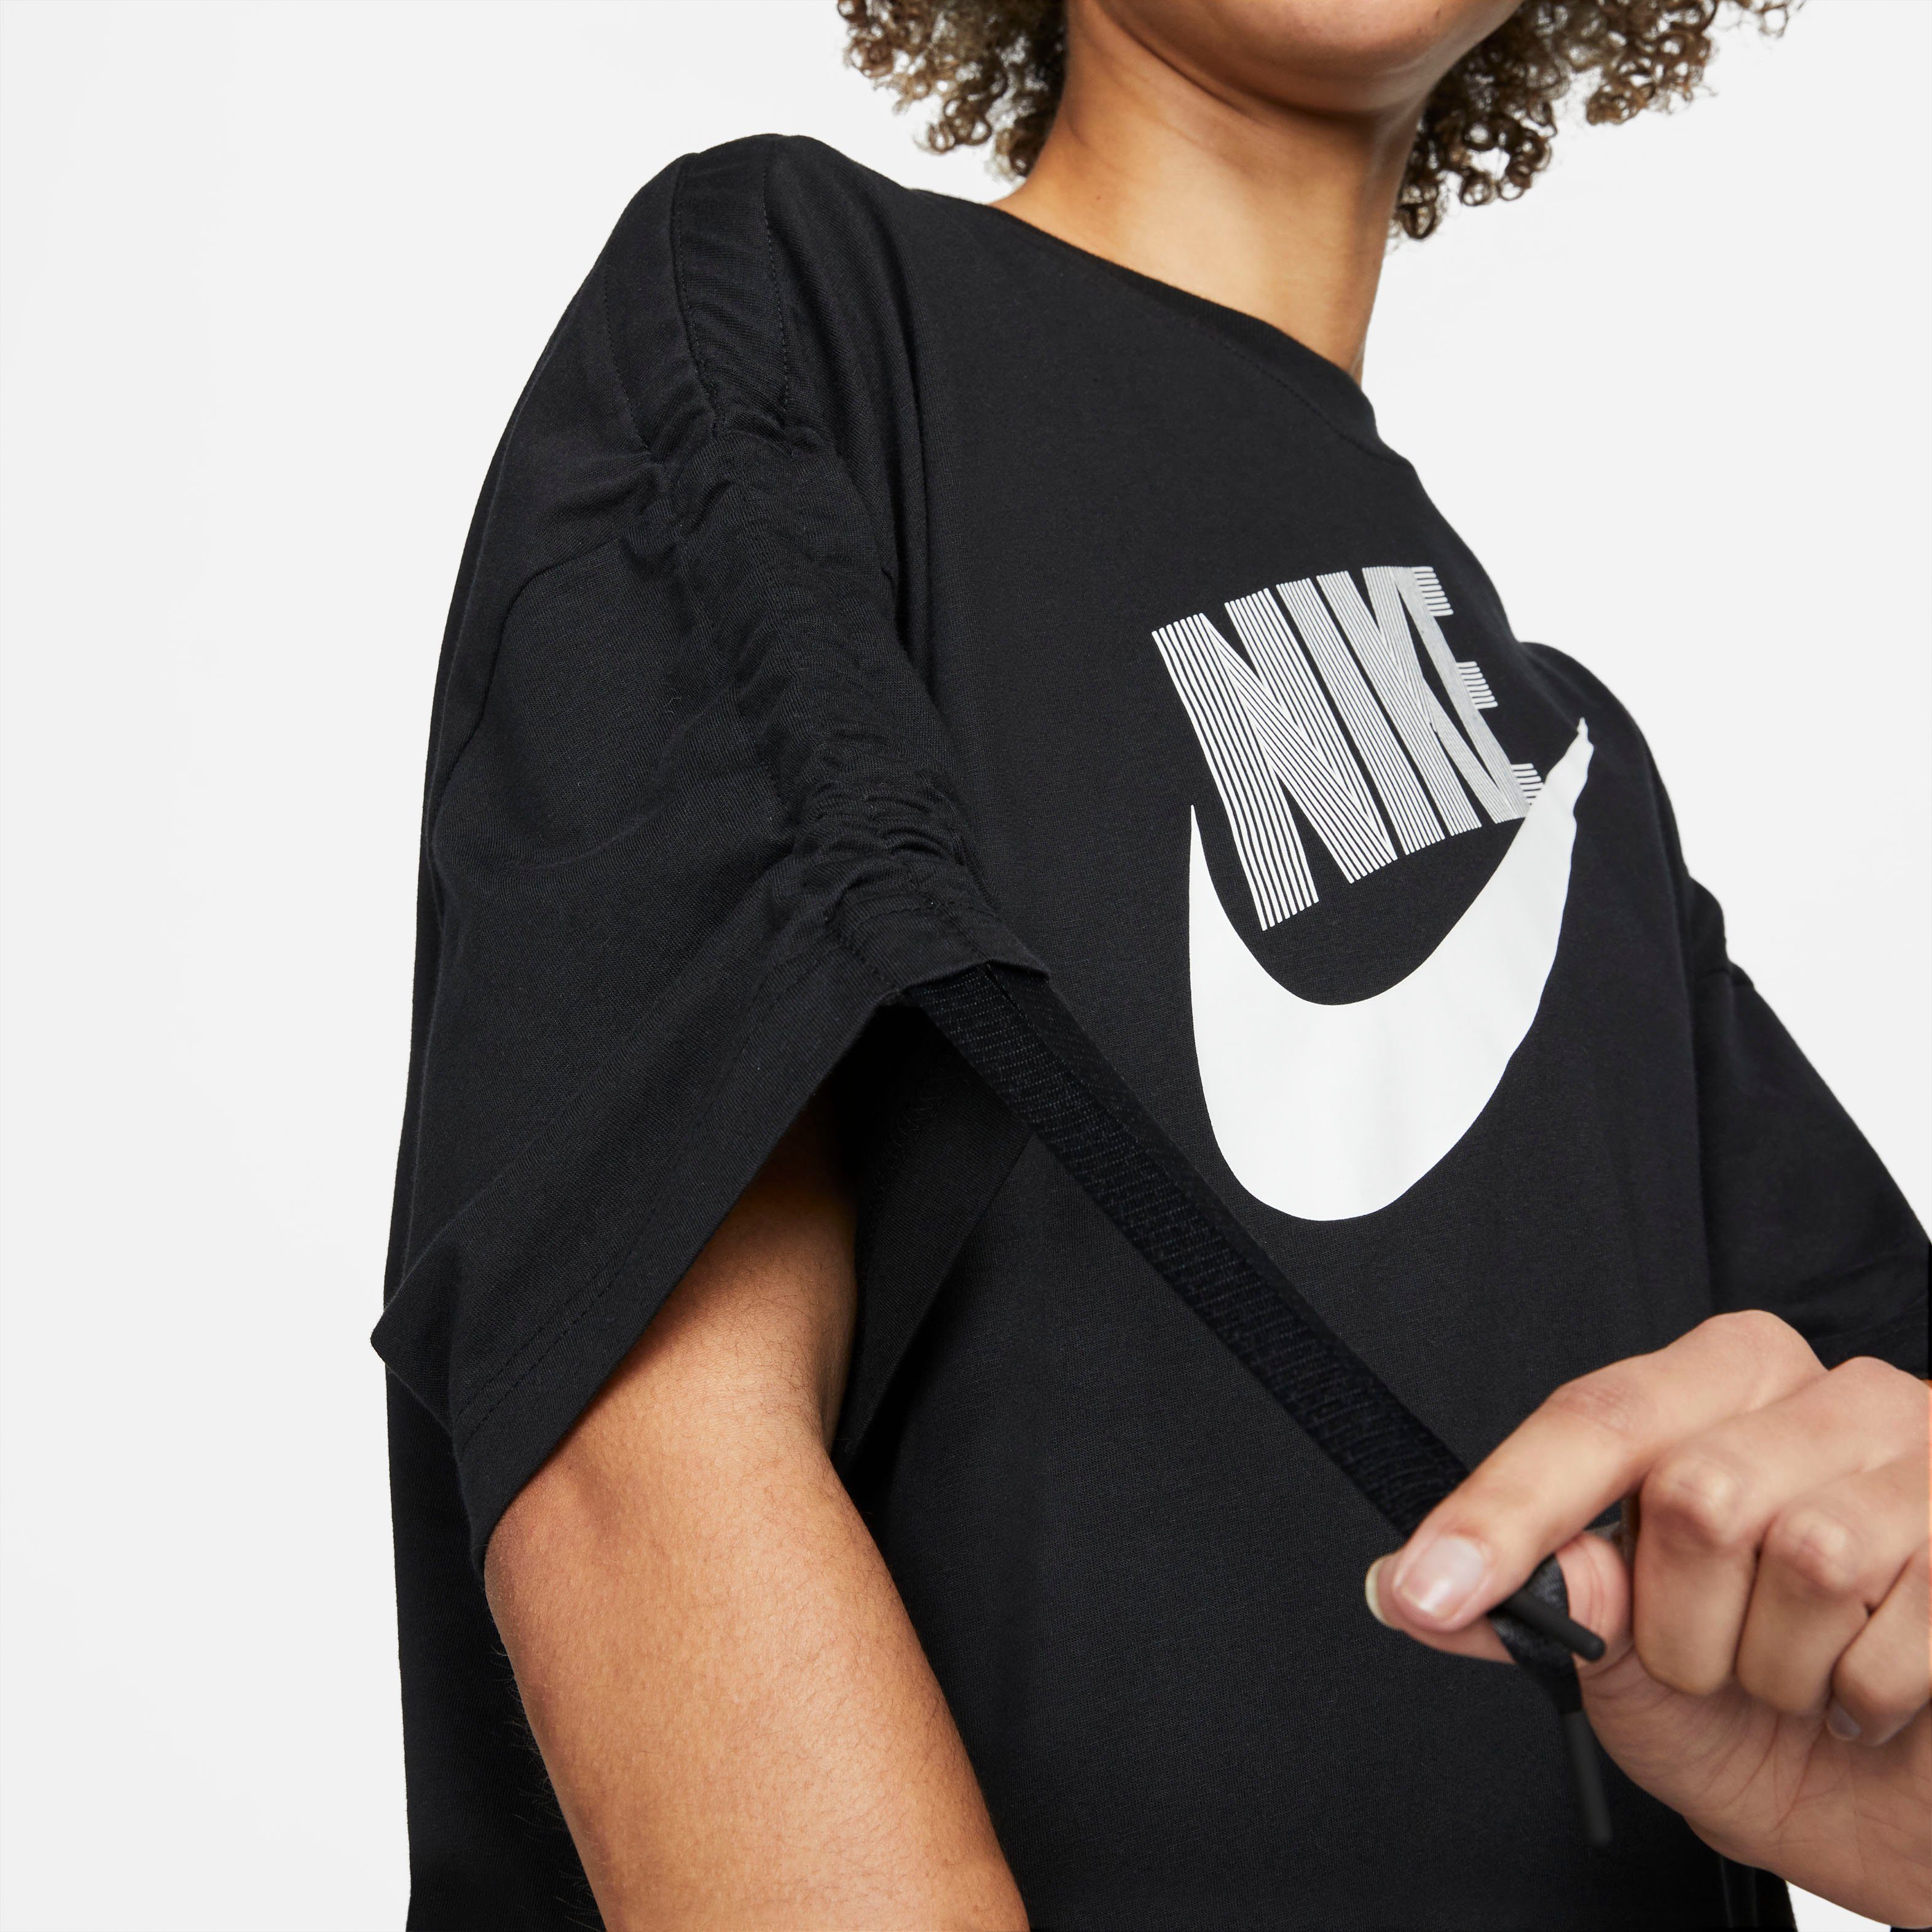 Sportswear NSW DNC Nike TOP W BLACK T-Shirt SS